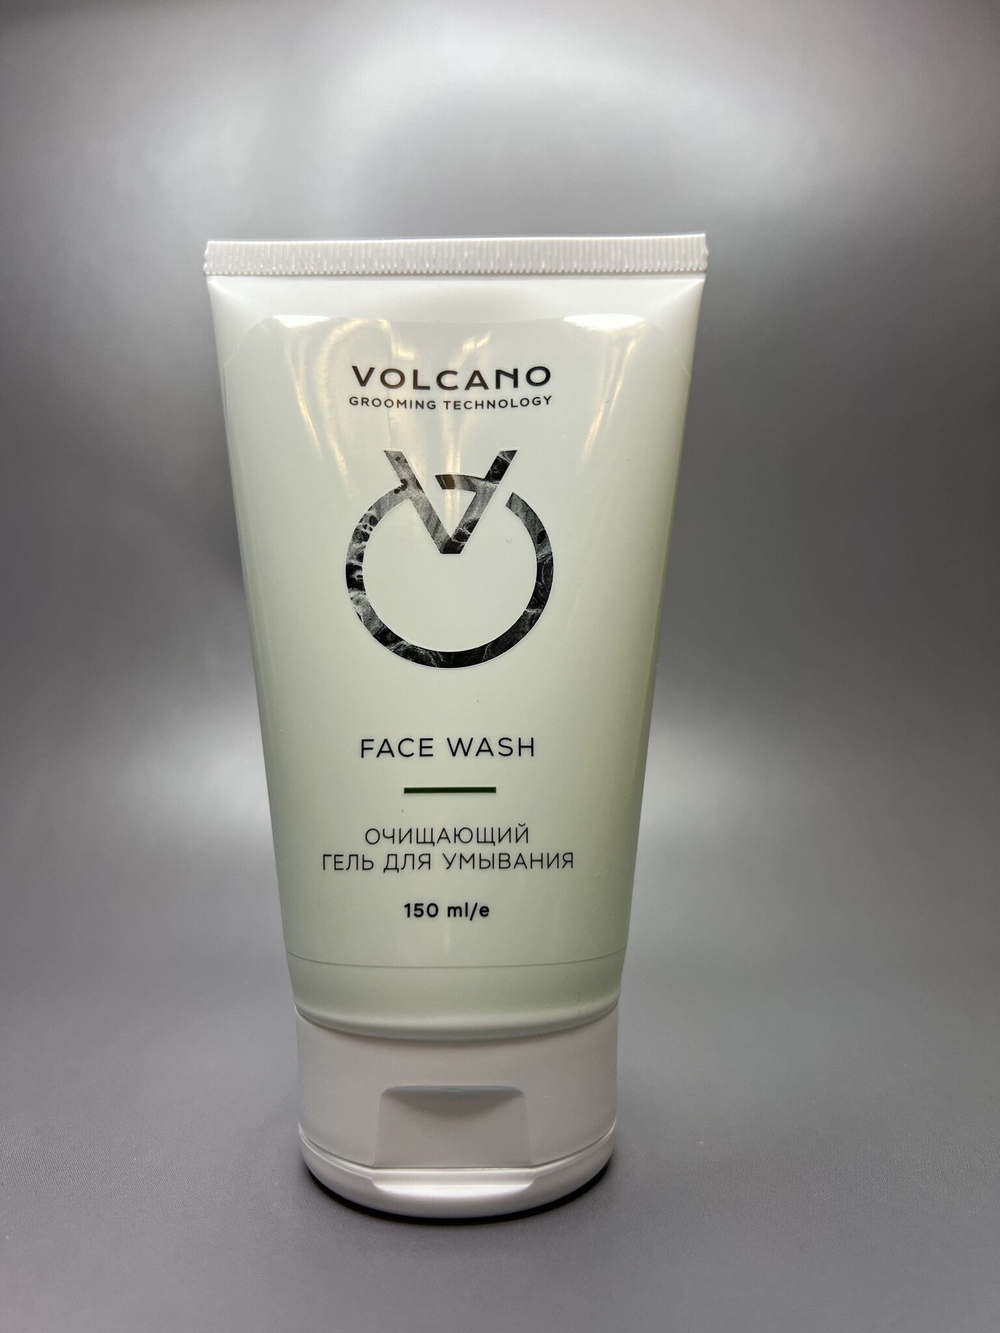 Volcano G.T. Face Wash Очищающий гель для умывания 150 мл